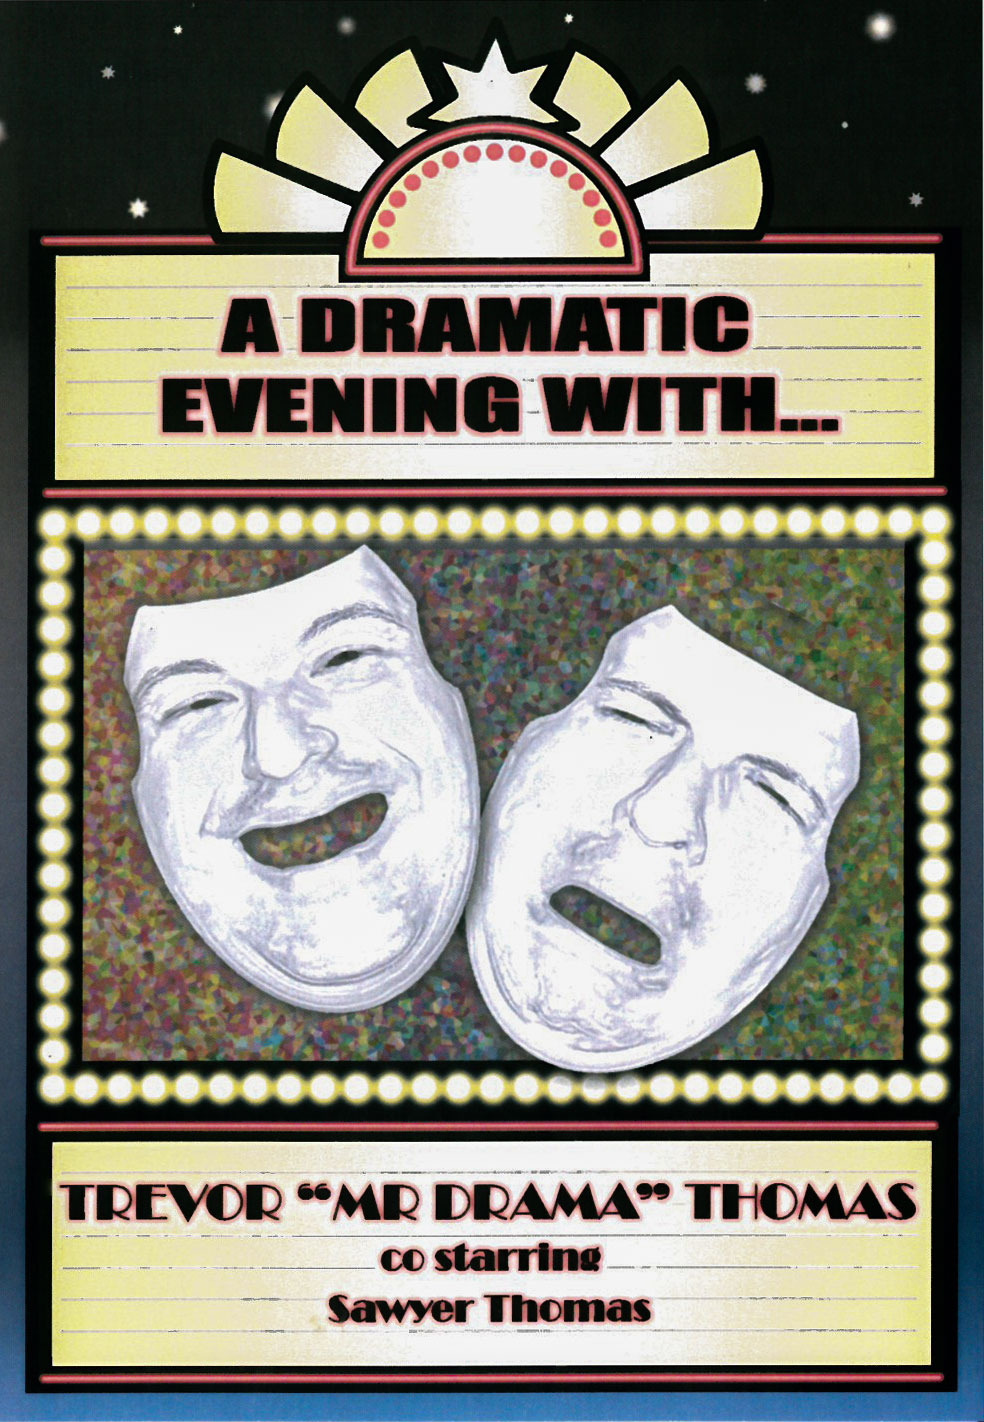 A Dramatic Evening with Trevor Thomas DVD